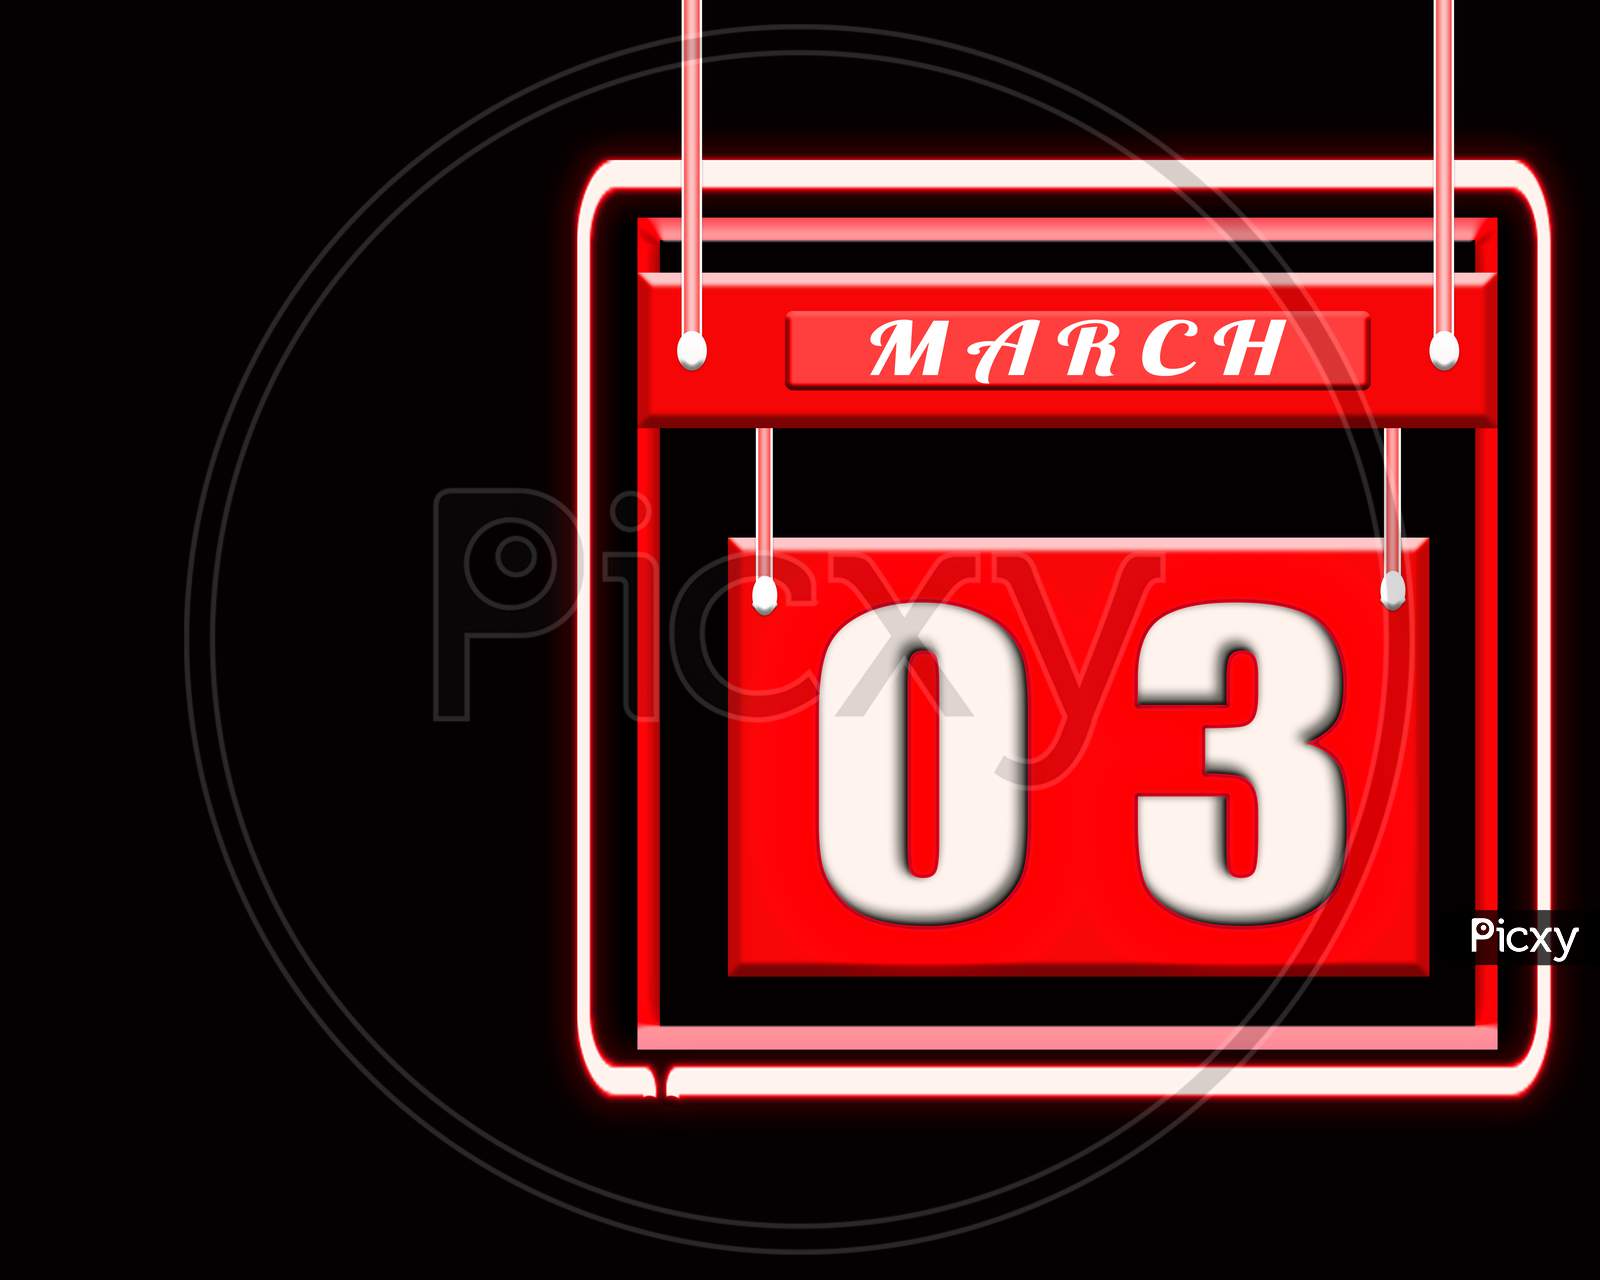 3 March, Red Calendar On Black Backgrand